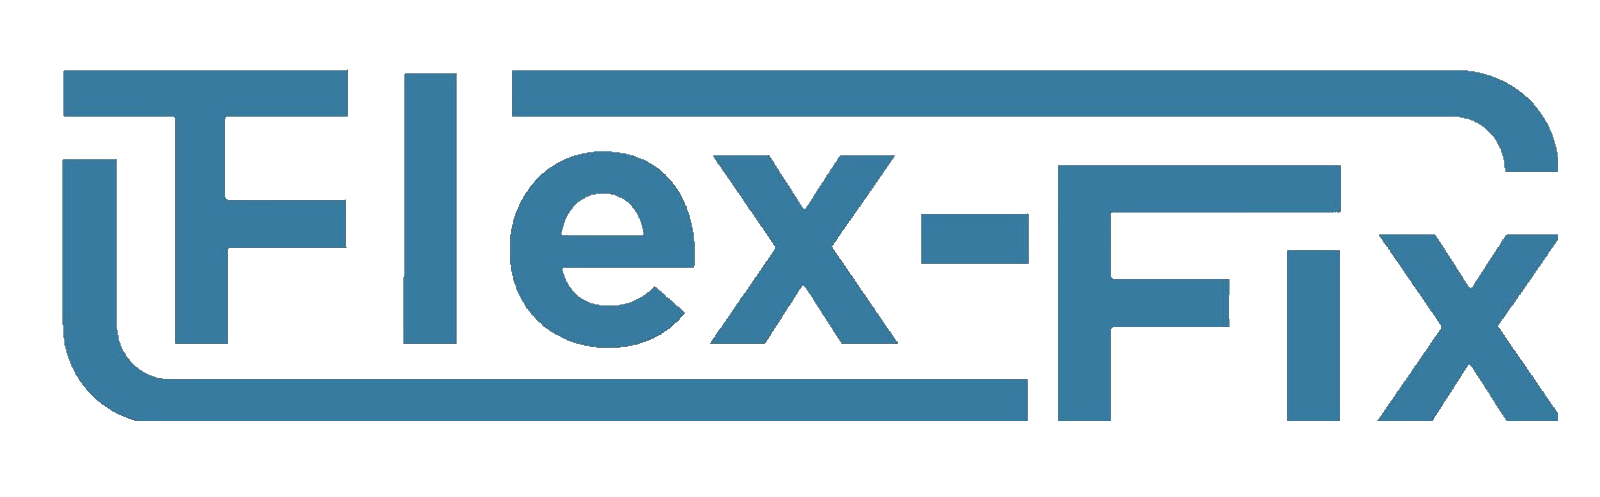 Flex-Fix – Werkgever